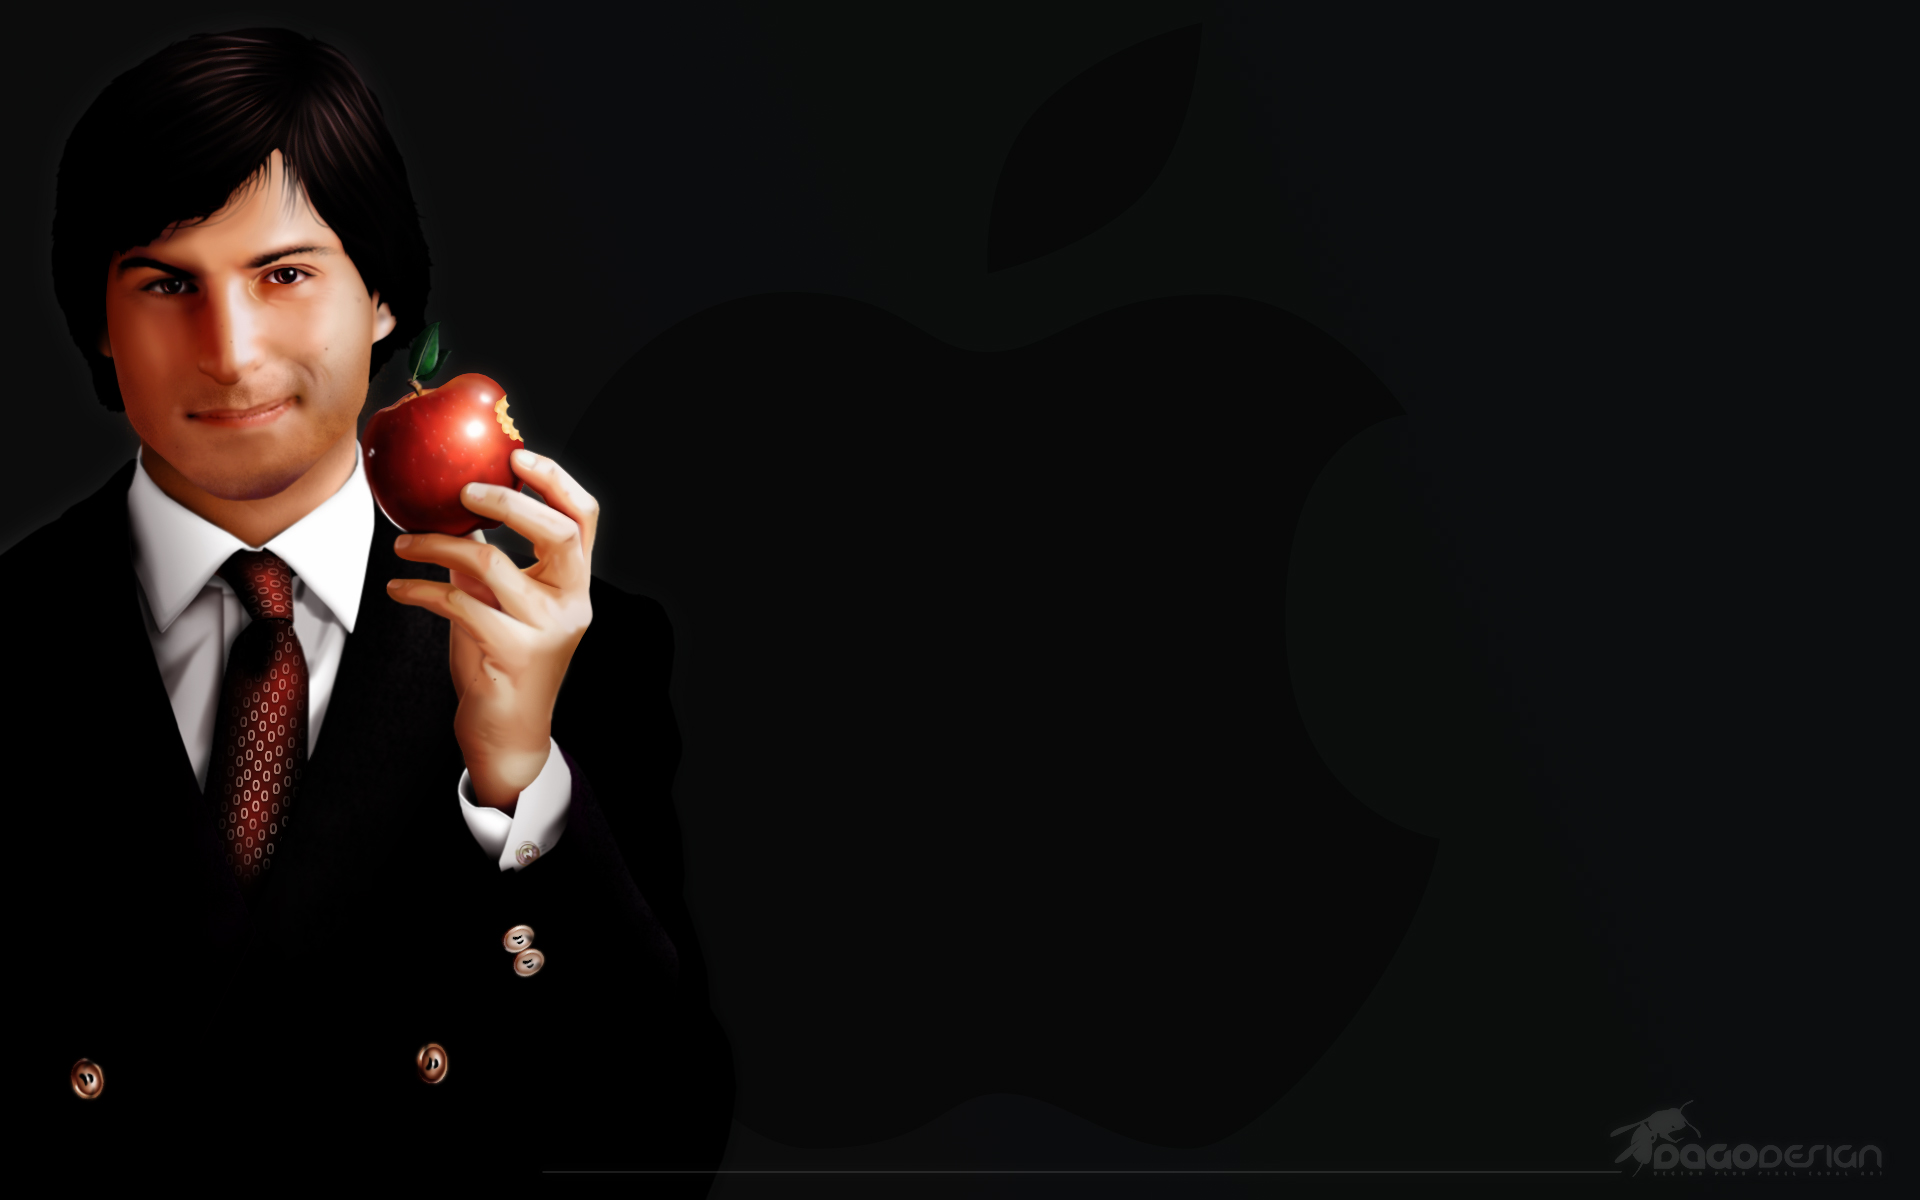 Steve Jobs Wallpaper Picture Photo Desktop